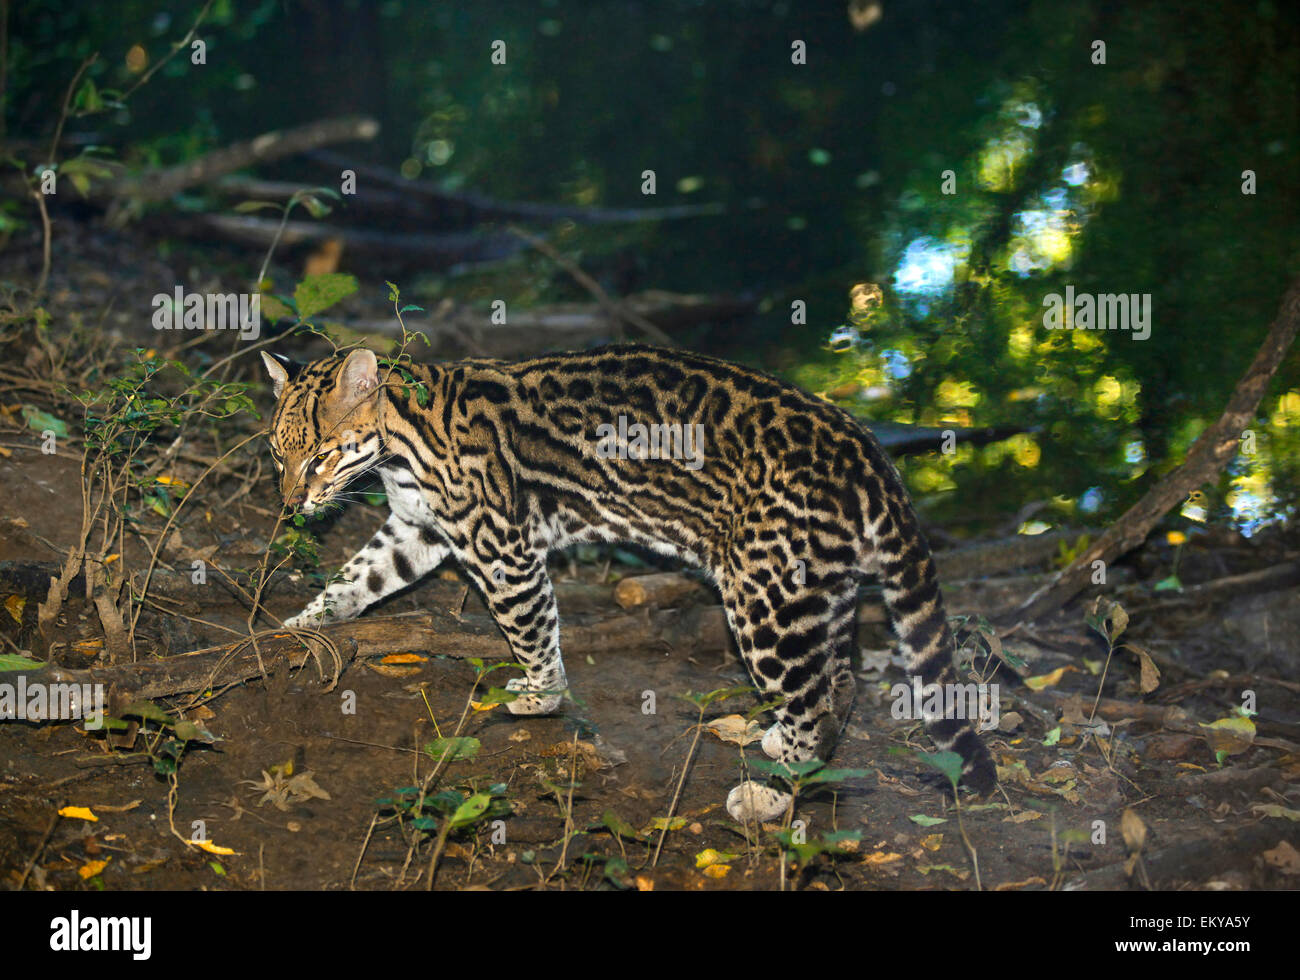 Ocelot (Leopardus pardalis) near the bank of a river Stock Photo